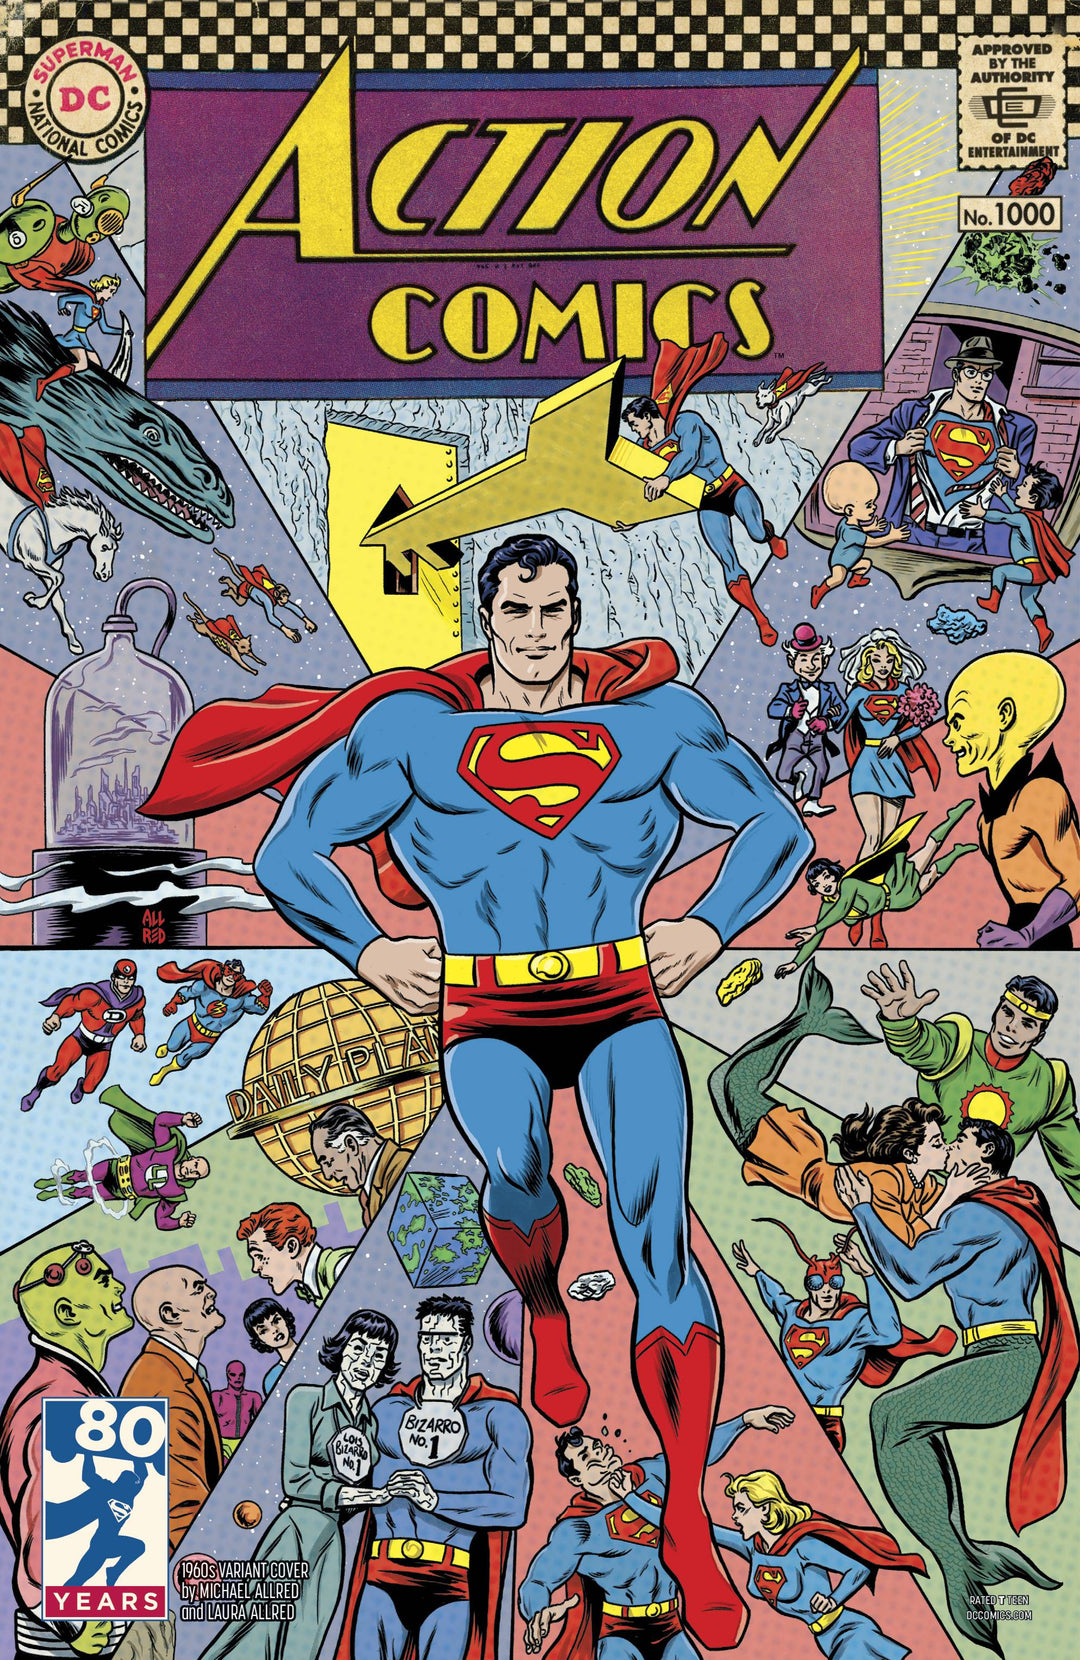 Action Comics #1000 1960s Variant Edition <BINS>